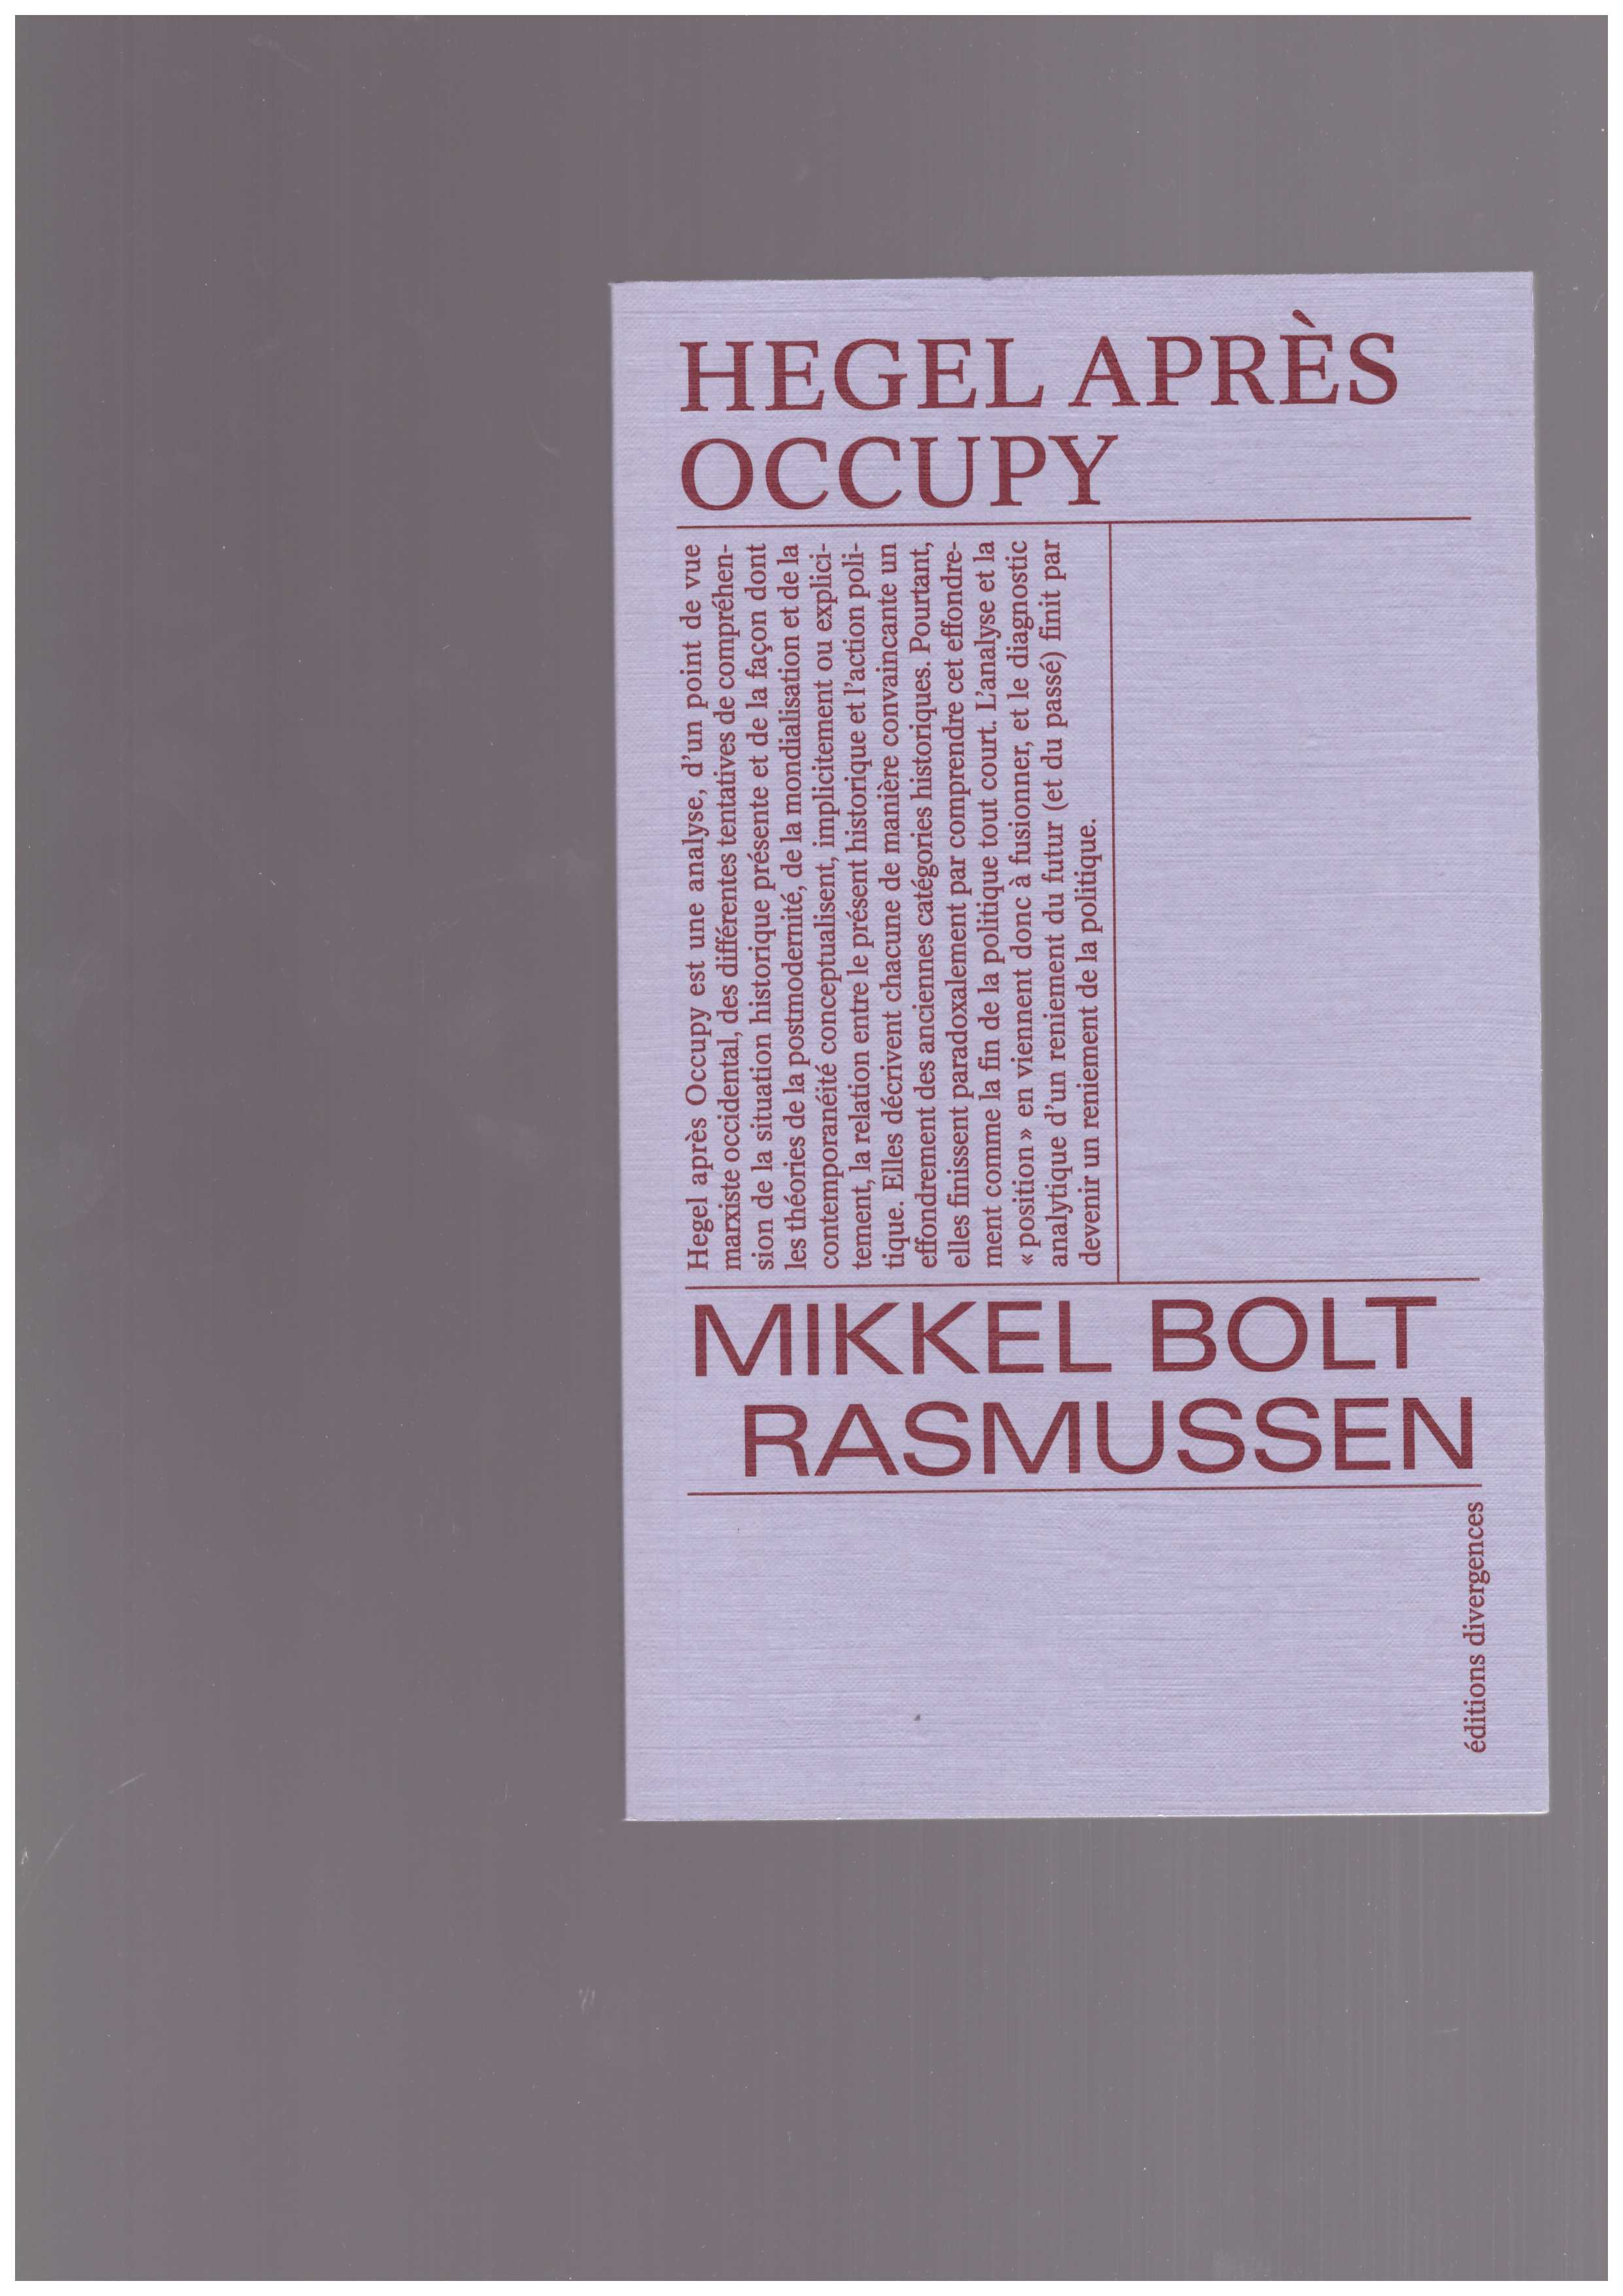 RASMUSSEN, Mikkel Bolt - Hegel après Occupy